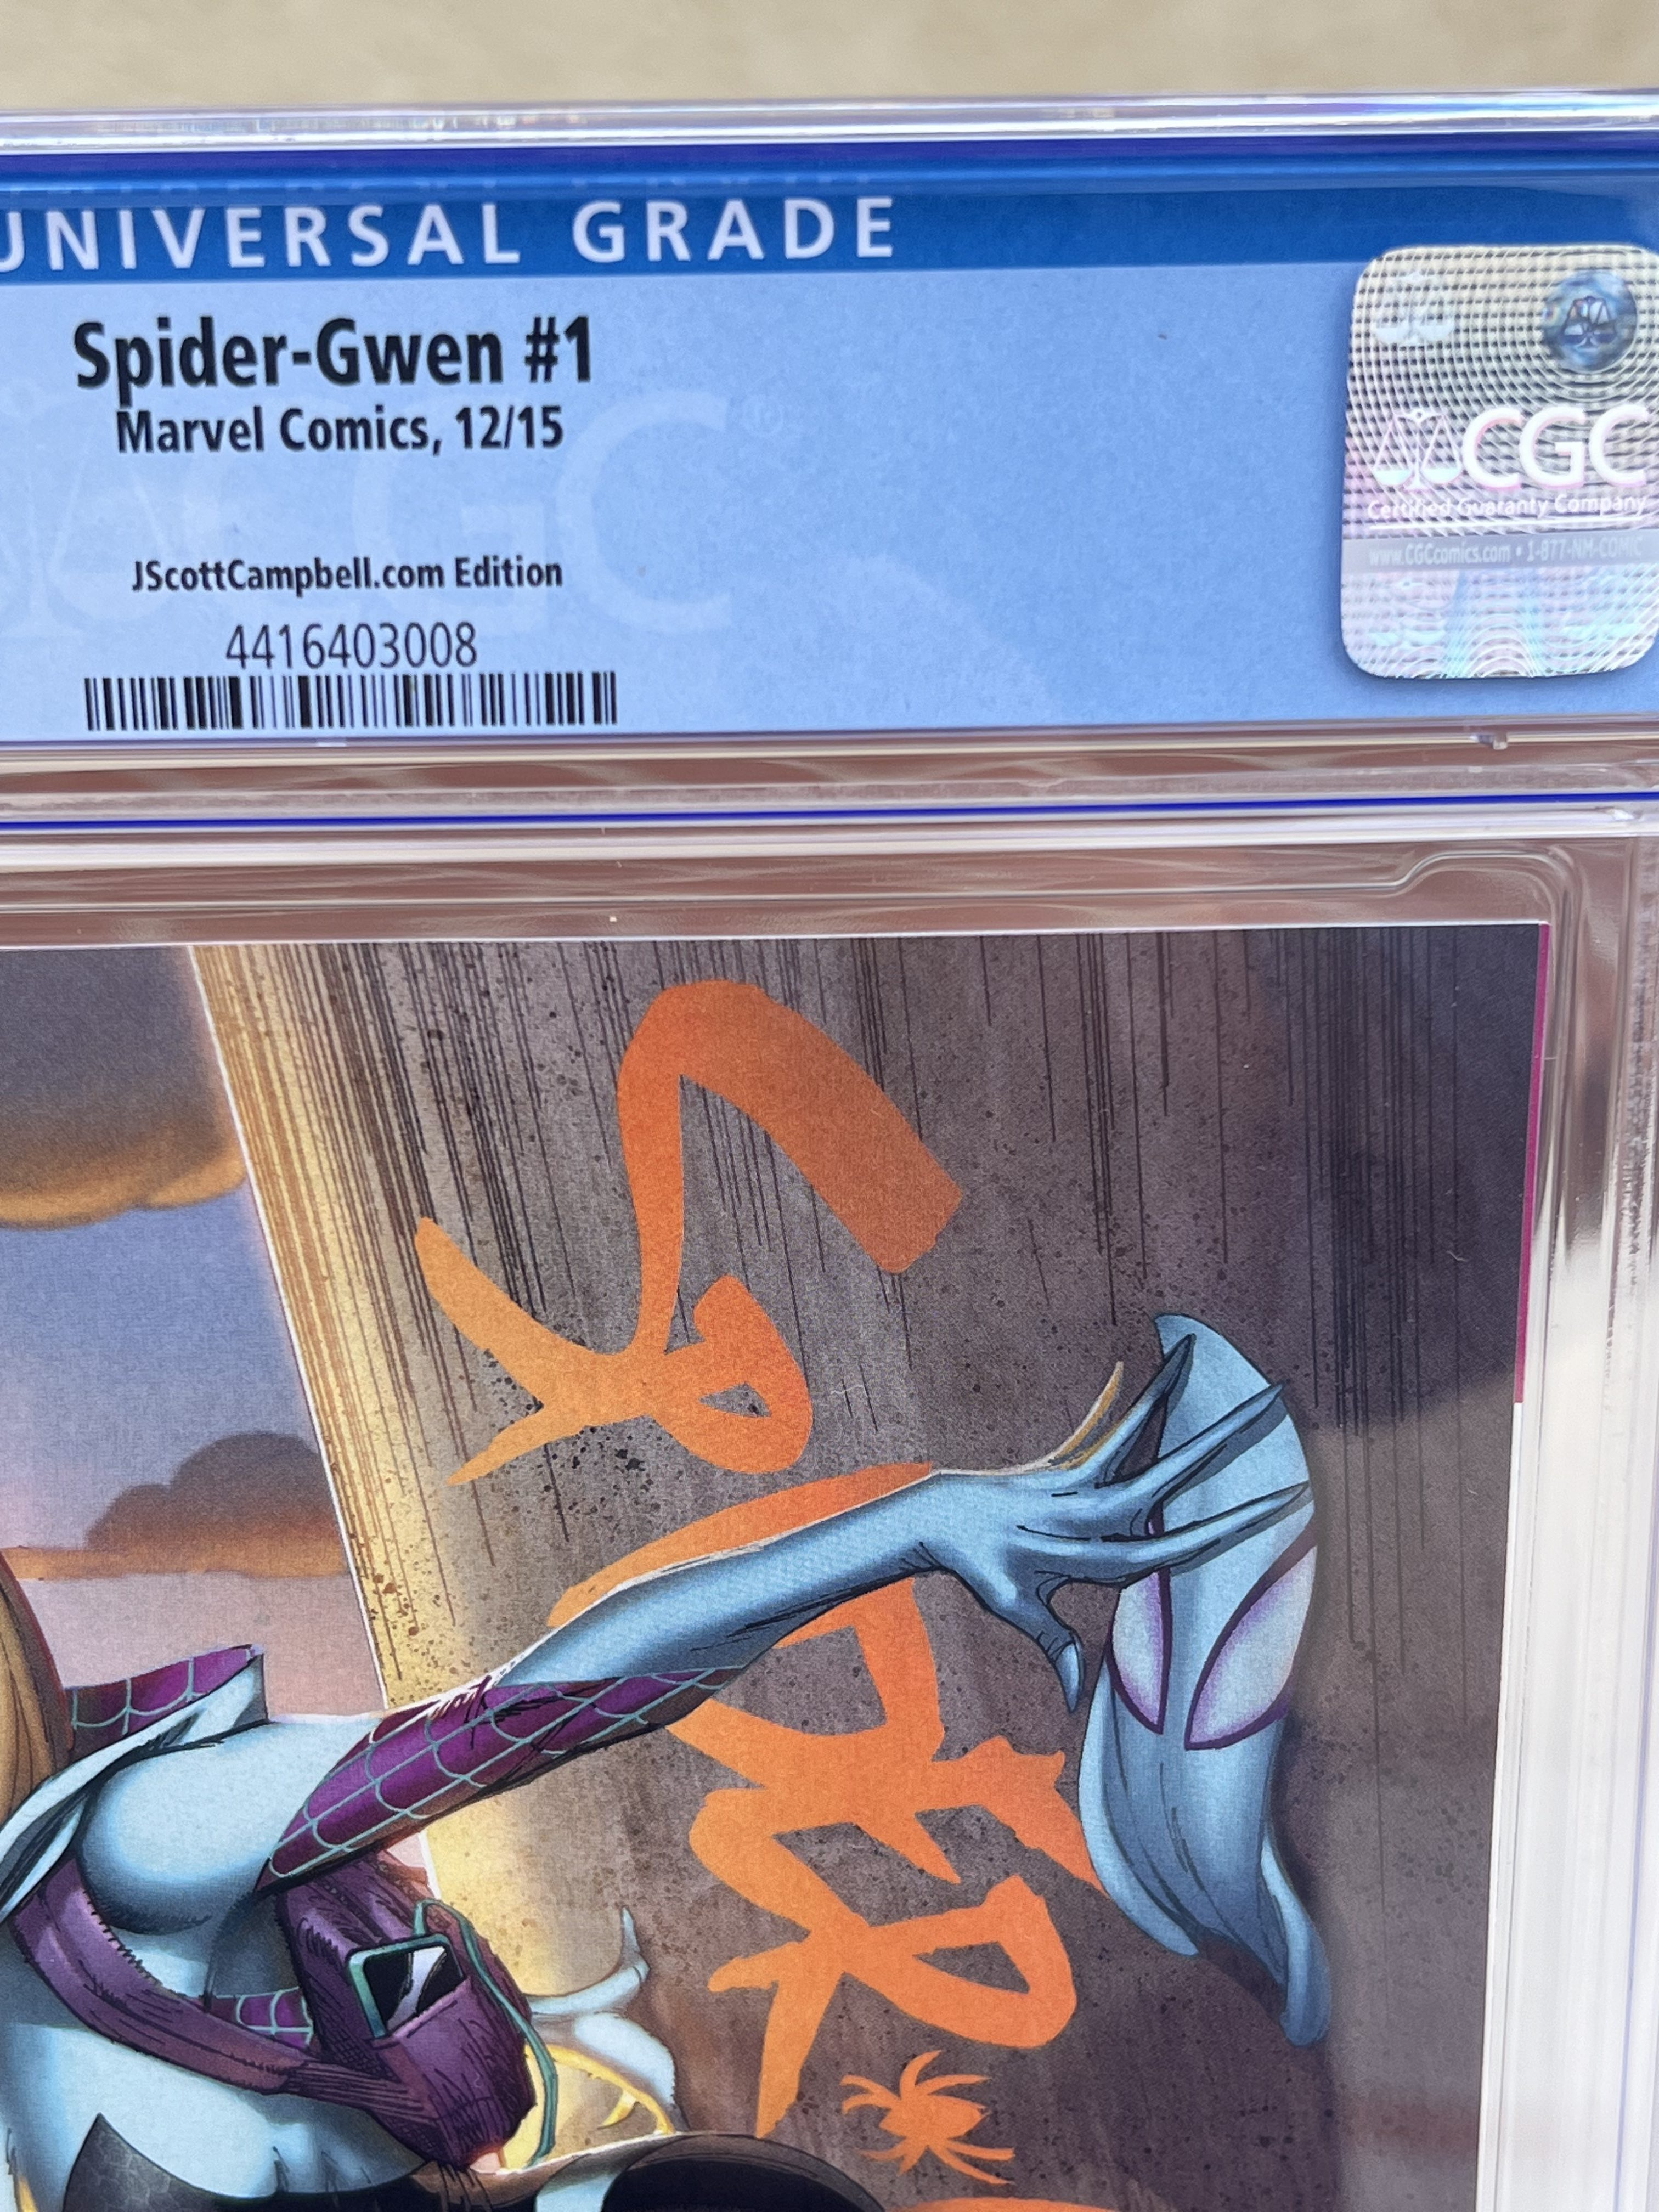 COMIC BOOK Spider-Gwen 1 12/15 Marvel Comics J ScottCampbell.com Edition CGC 9.8 WHITE